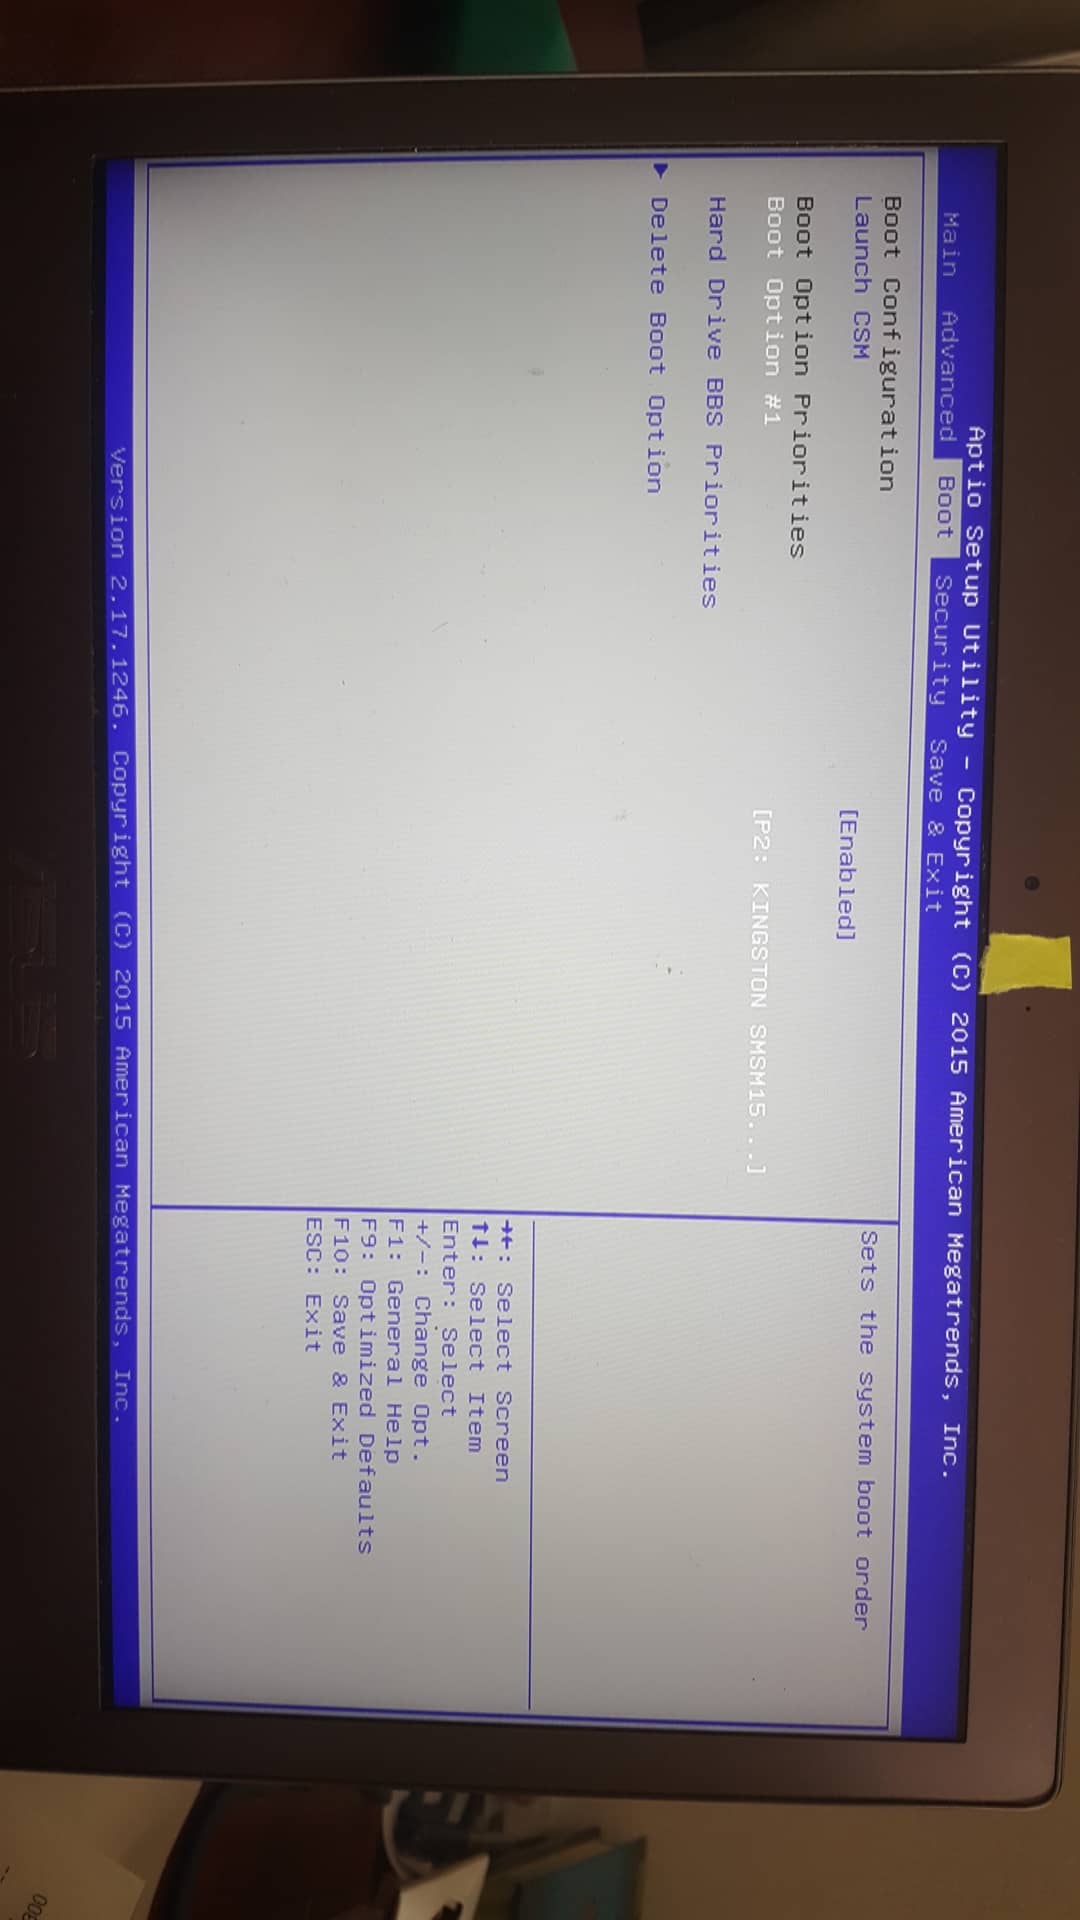 My Asus Zenbook UX333 only boots into Aptio Setup Utility 9fad73c8-74d3-4b87-85f3-860ca13f251f?upload=true.jpg